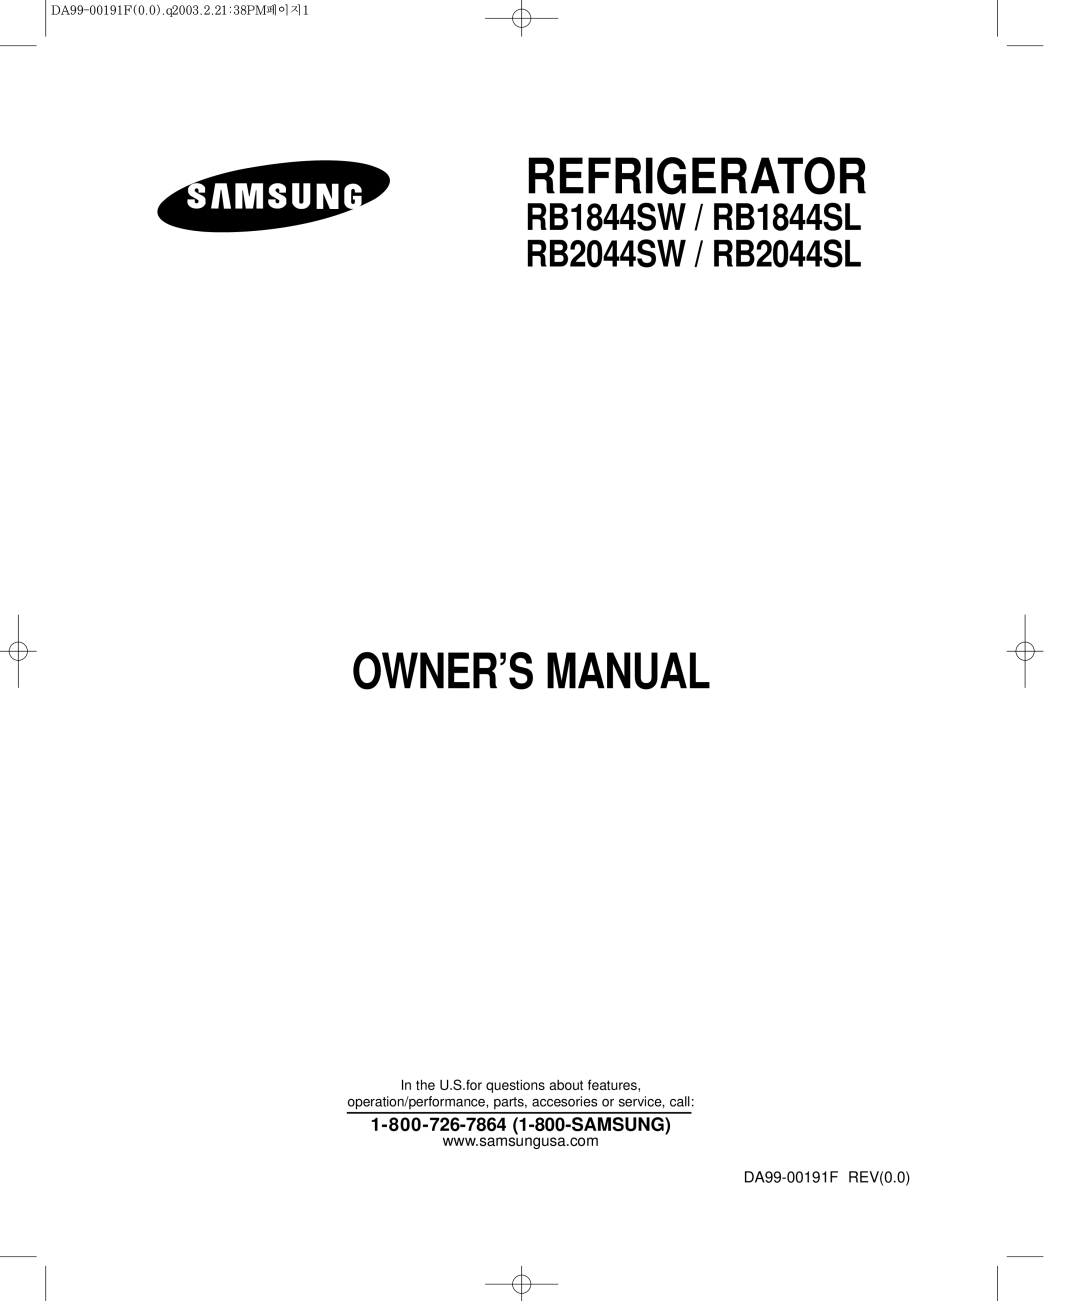 Samsung owner manual Refrigerator, RB1844SW / RB1844SL RB2044SW / RB2044SL, DA68-00998AREV0.0 